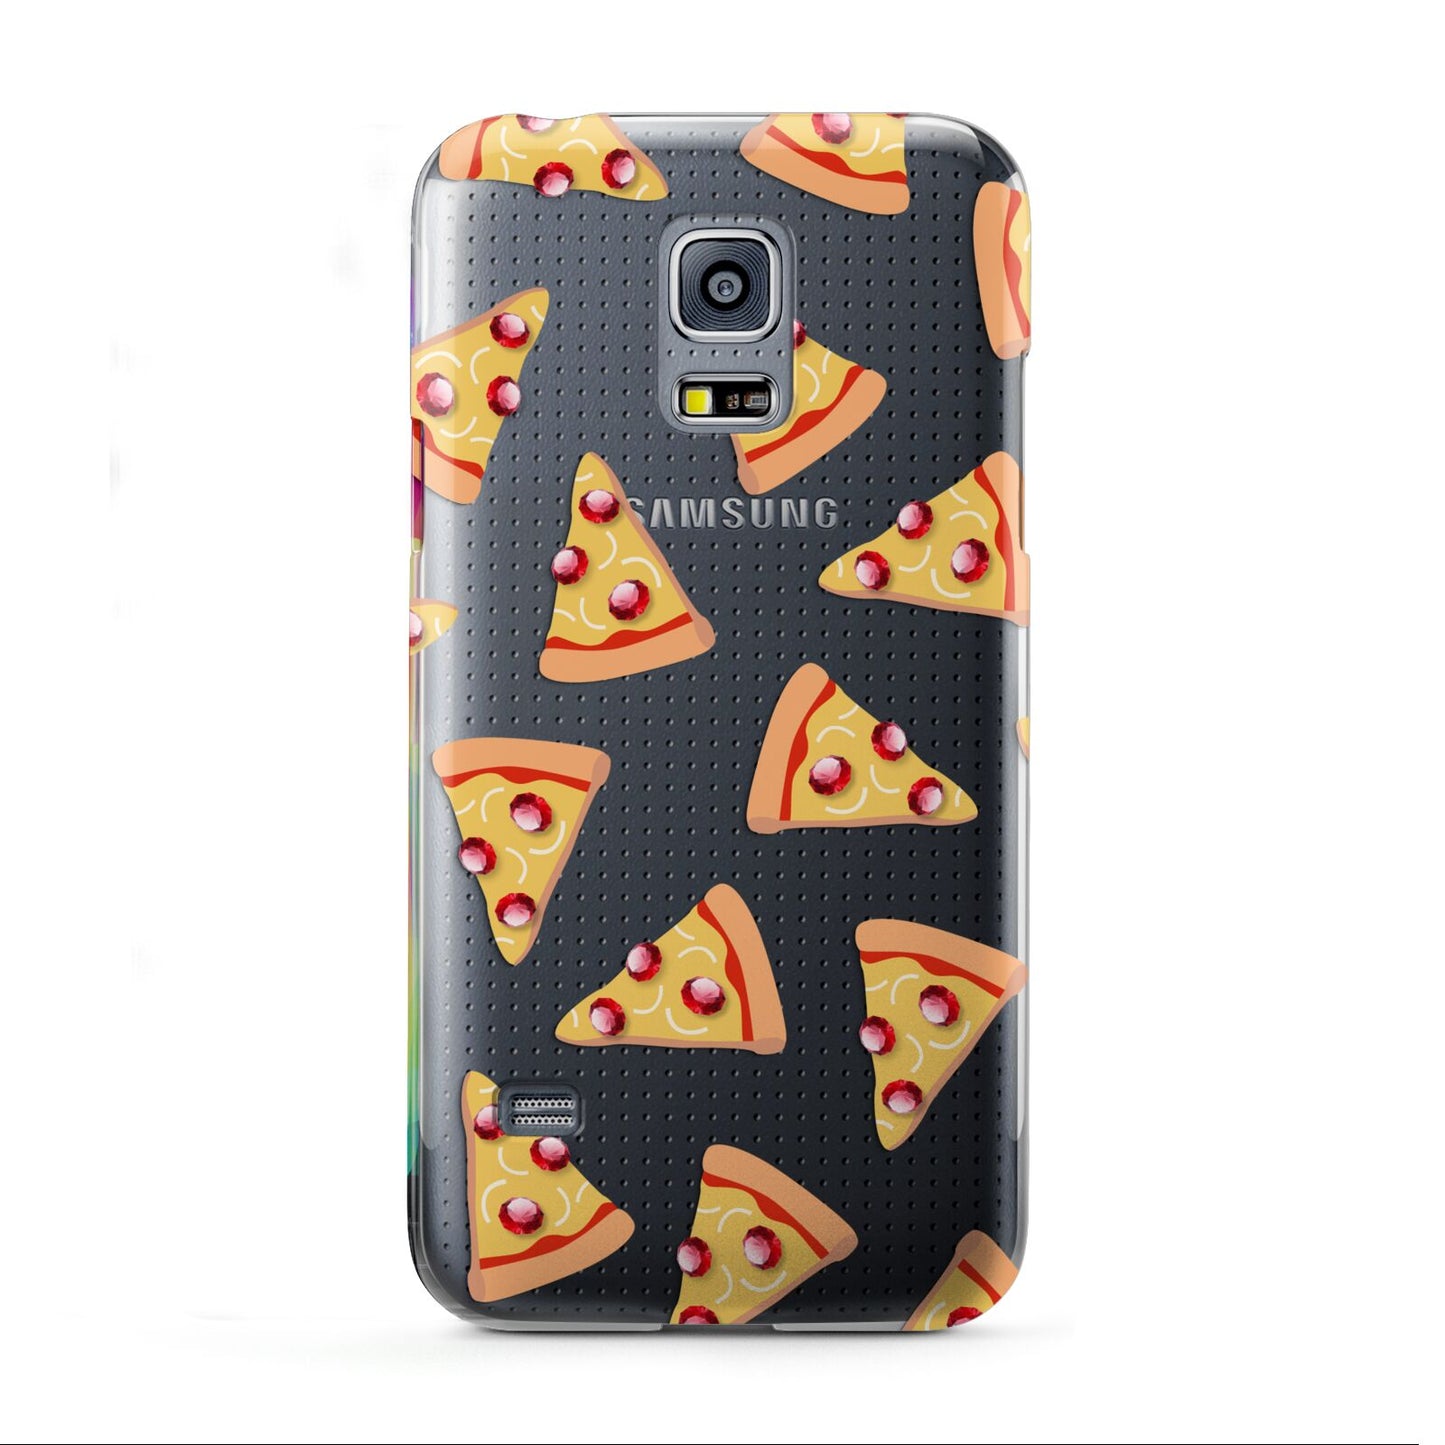 Rubies on Cartoon Pizza Slices Samsung Galaxy S5 Mini Case